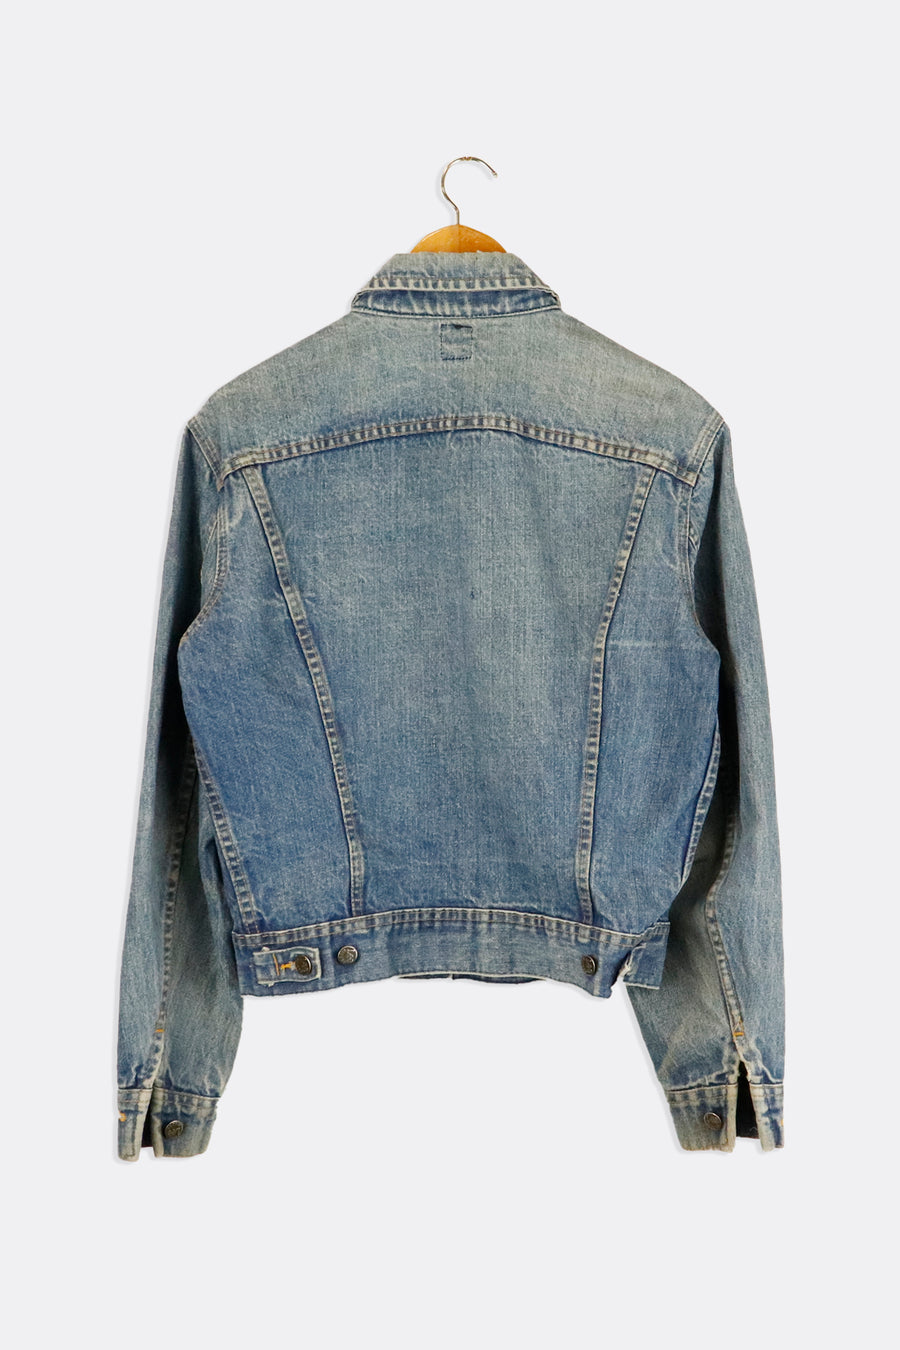 Vintage Lee Medium Shade Denim Full Button Up Jacket Outerwear